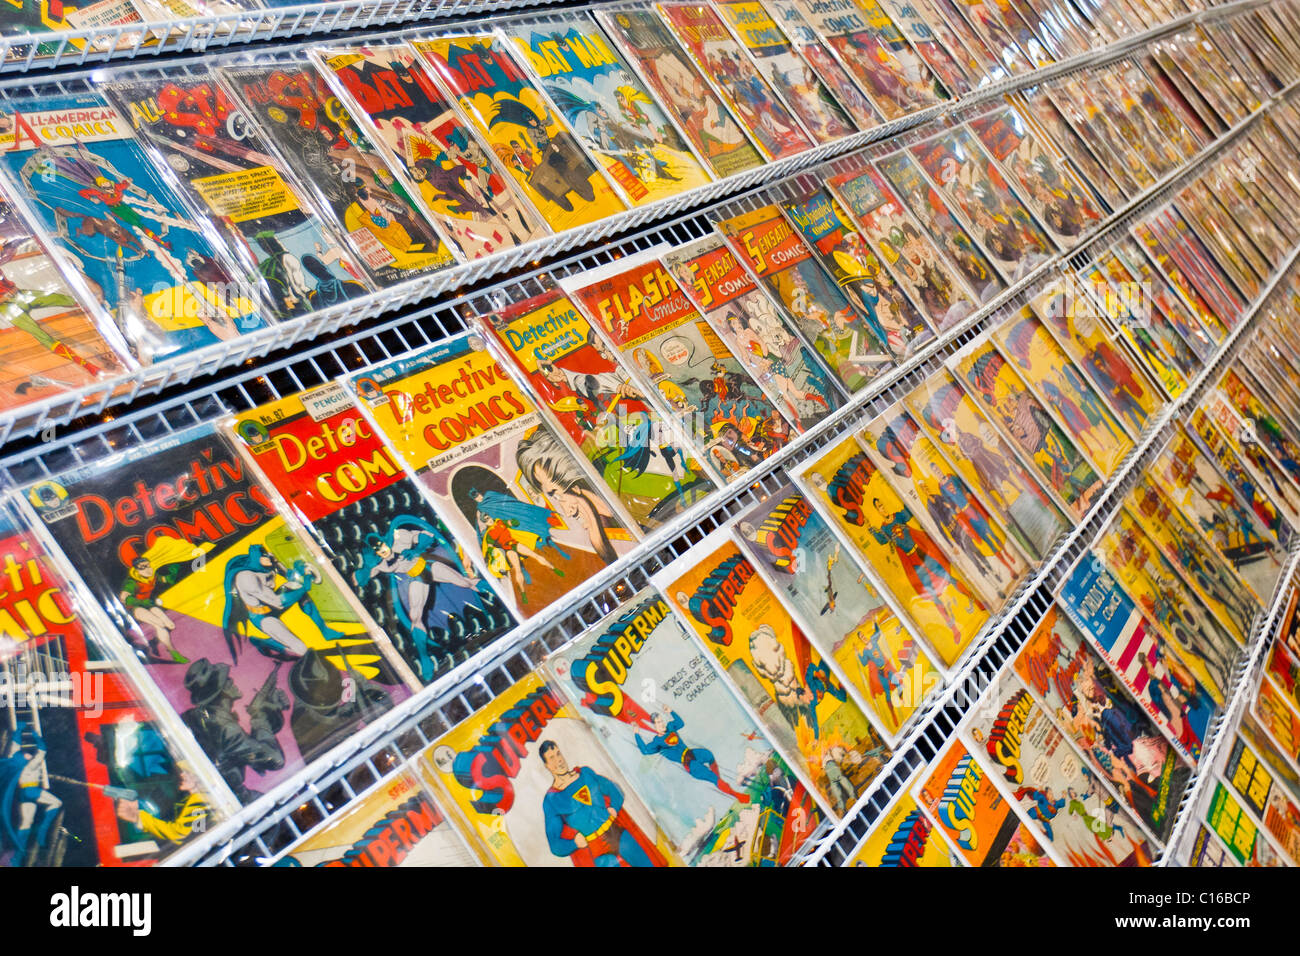 Superhero Comic Books Stock Photo